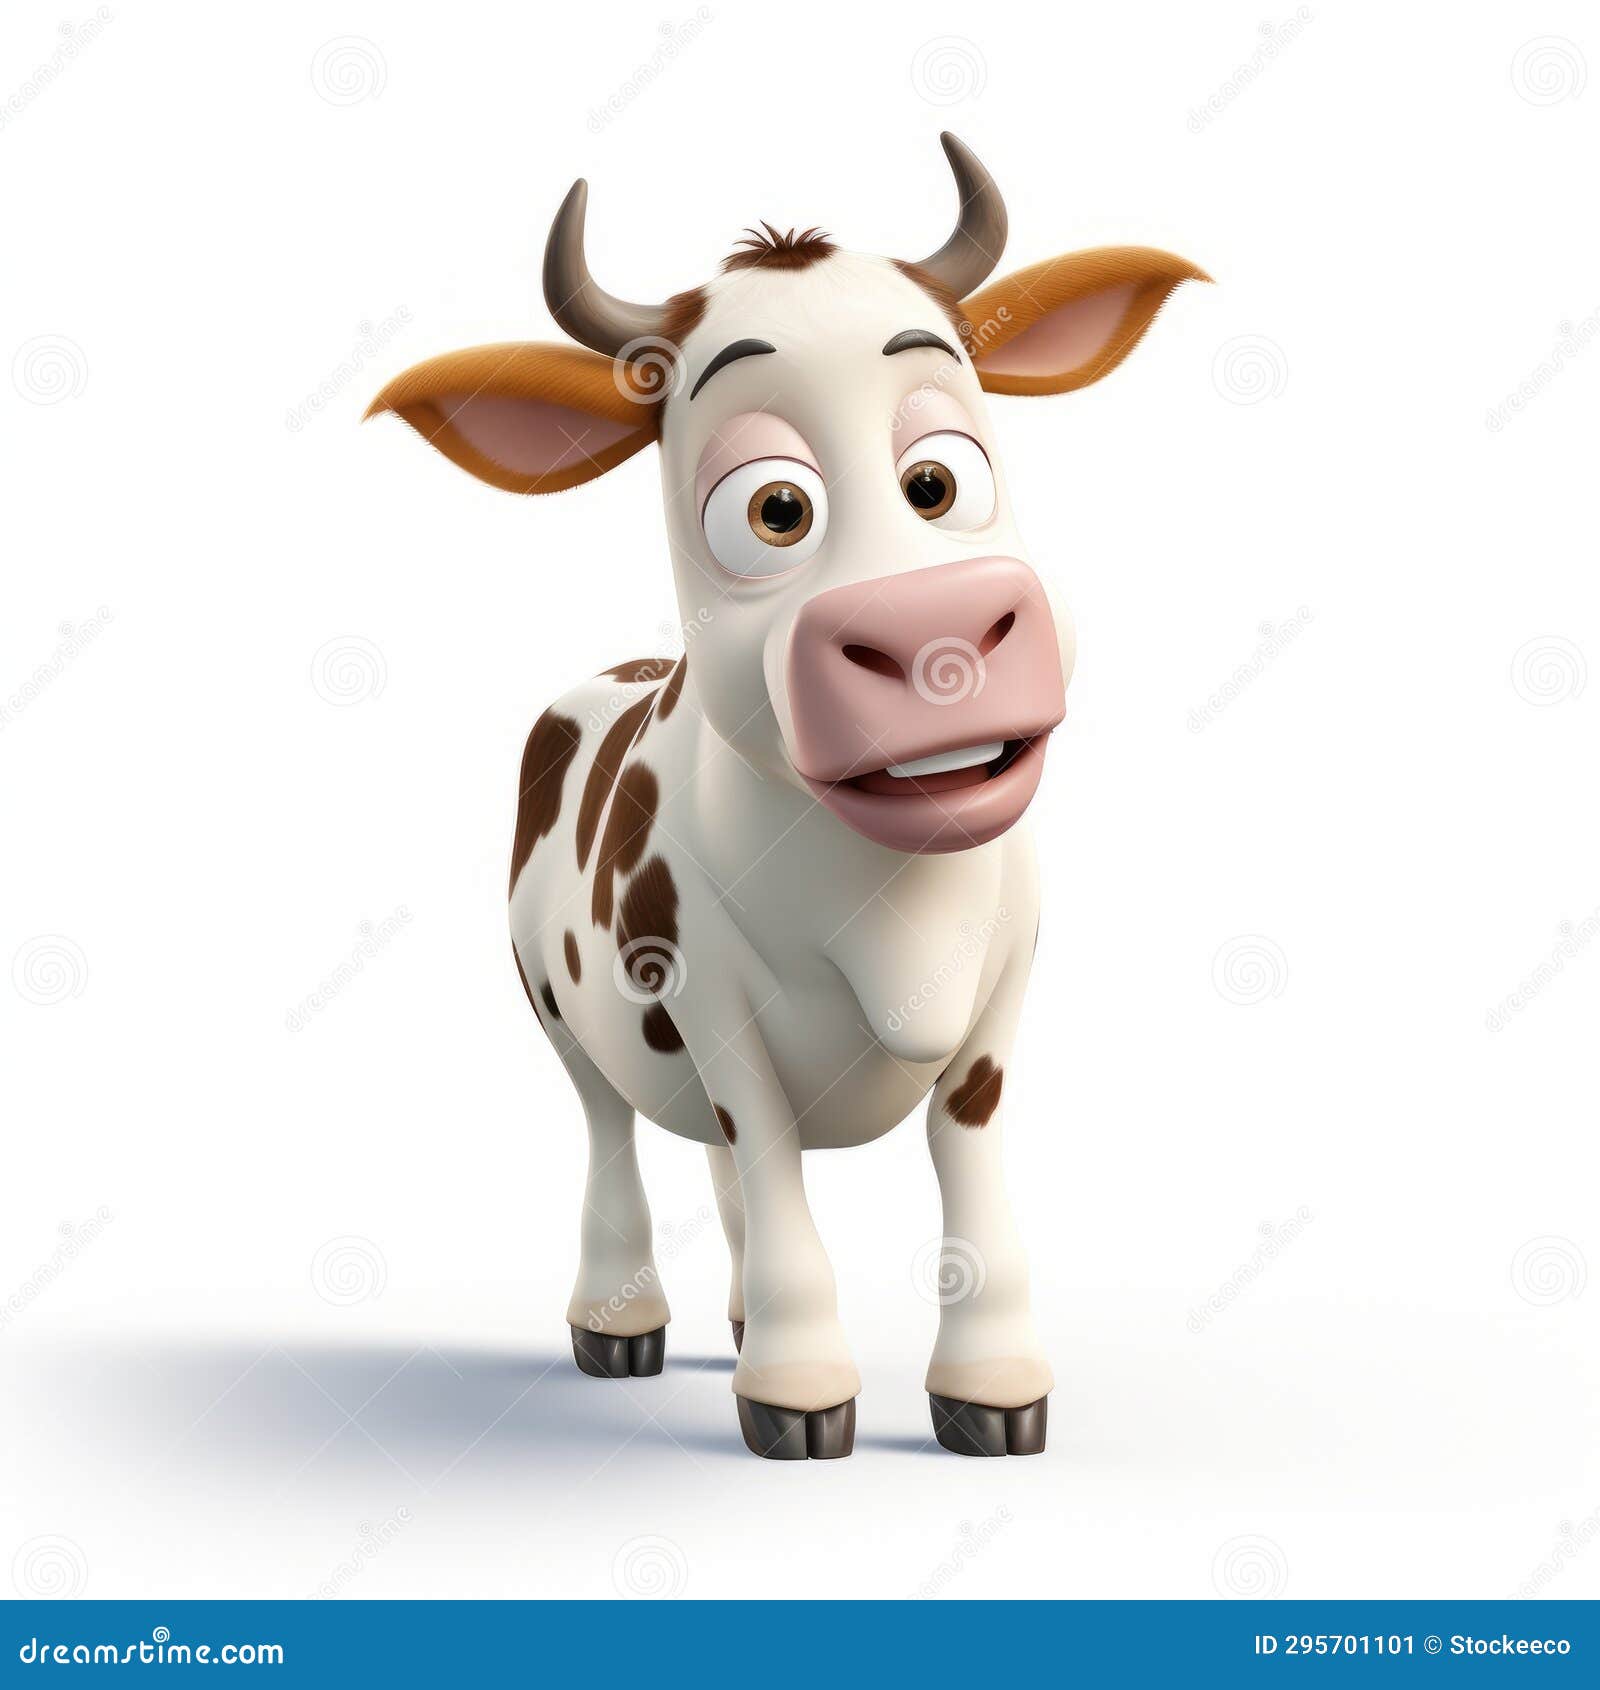 charming photorealistic 3d pixar cow 